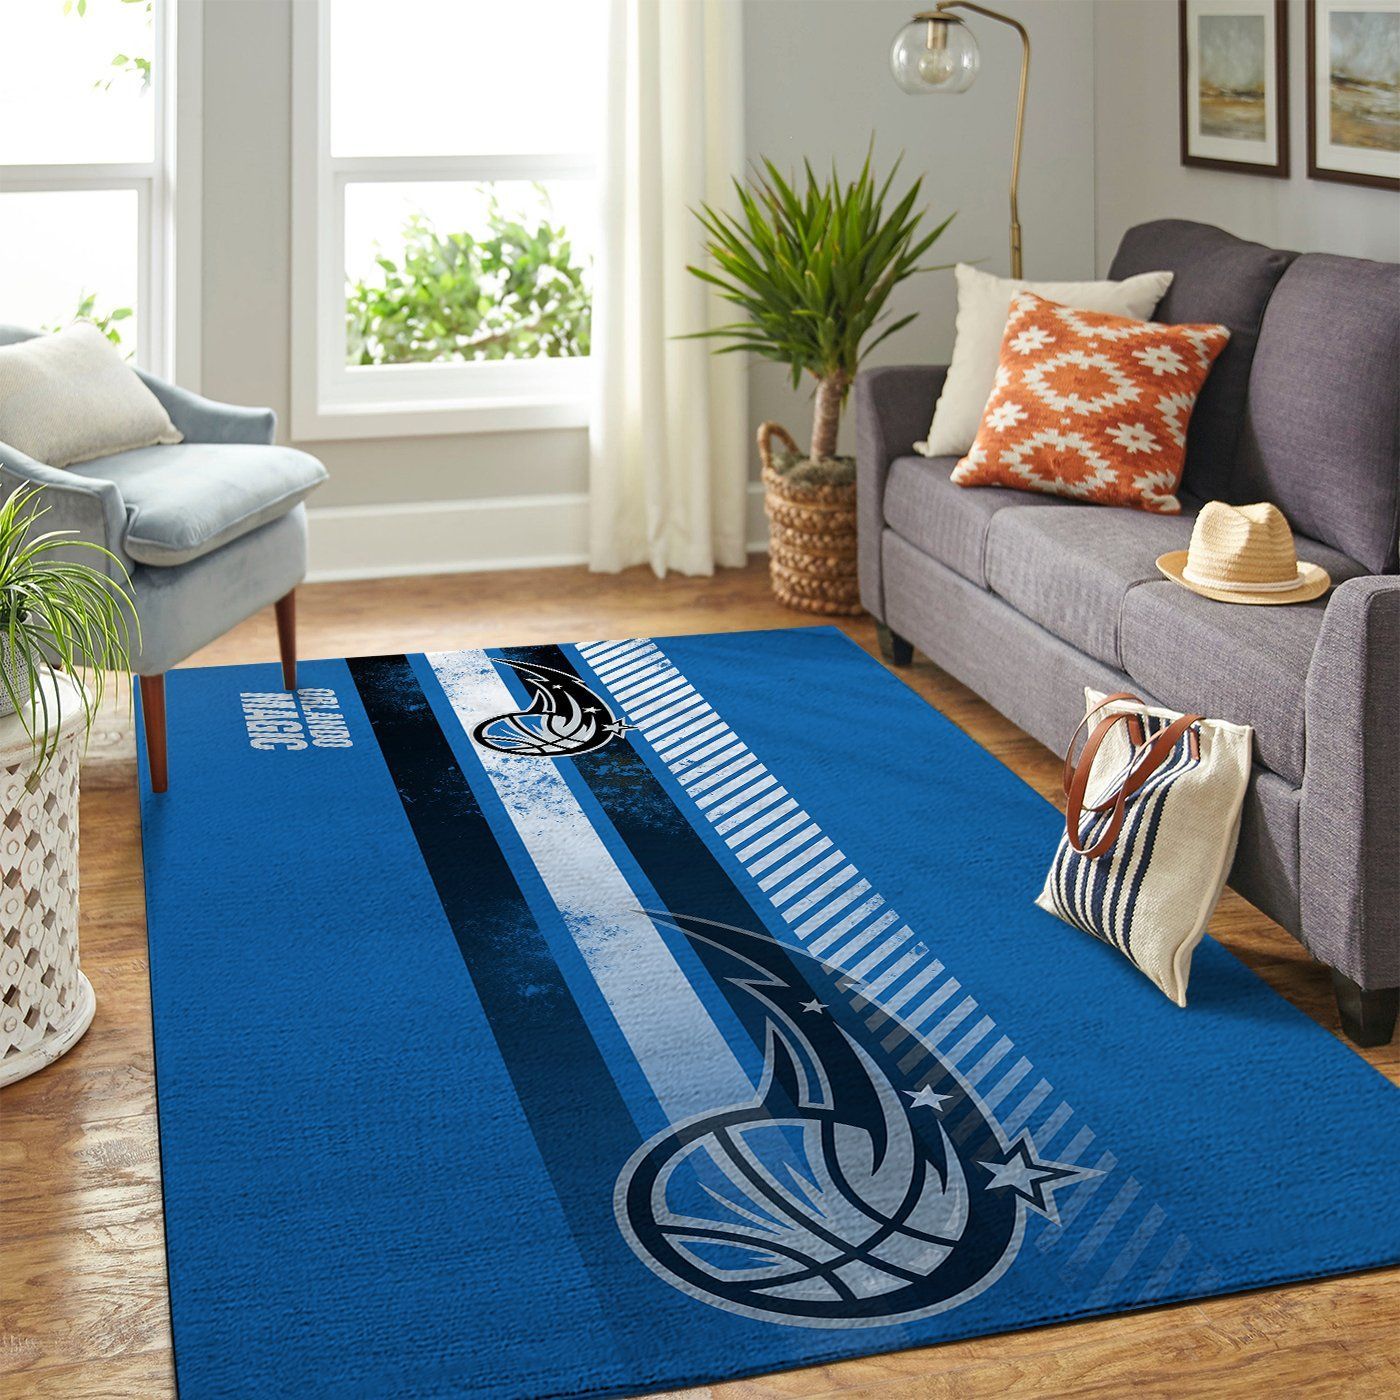 Orlando Magic Nba Team Logo Nice Gift Floor home decoration carpet rug